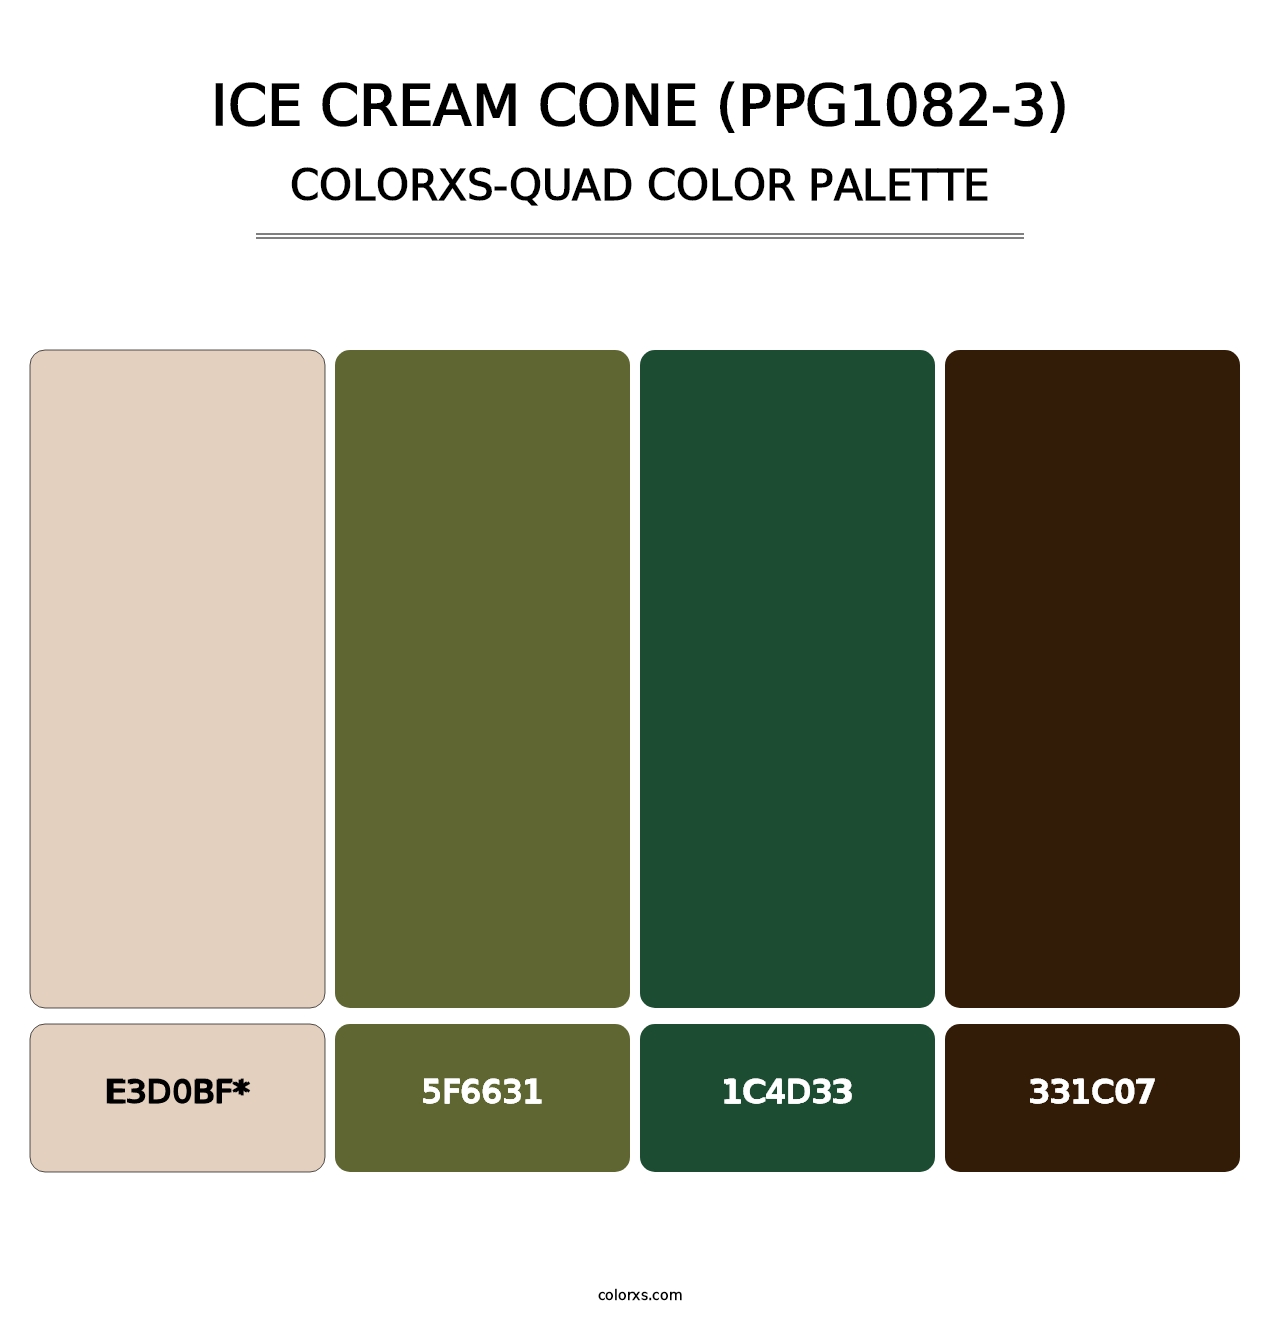 Ice Cream Cone (PPG1082-3) - Colorxs Quad Palette